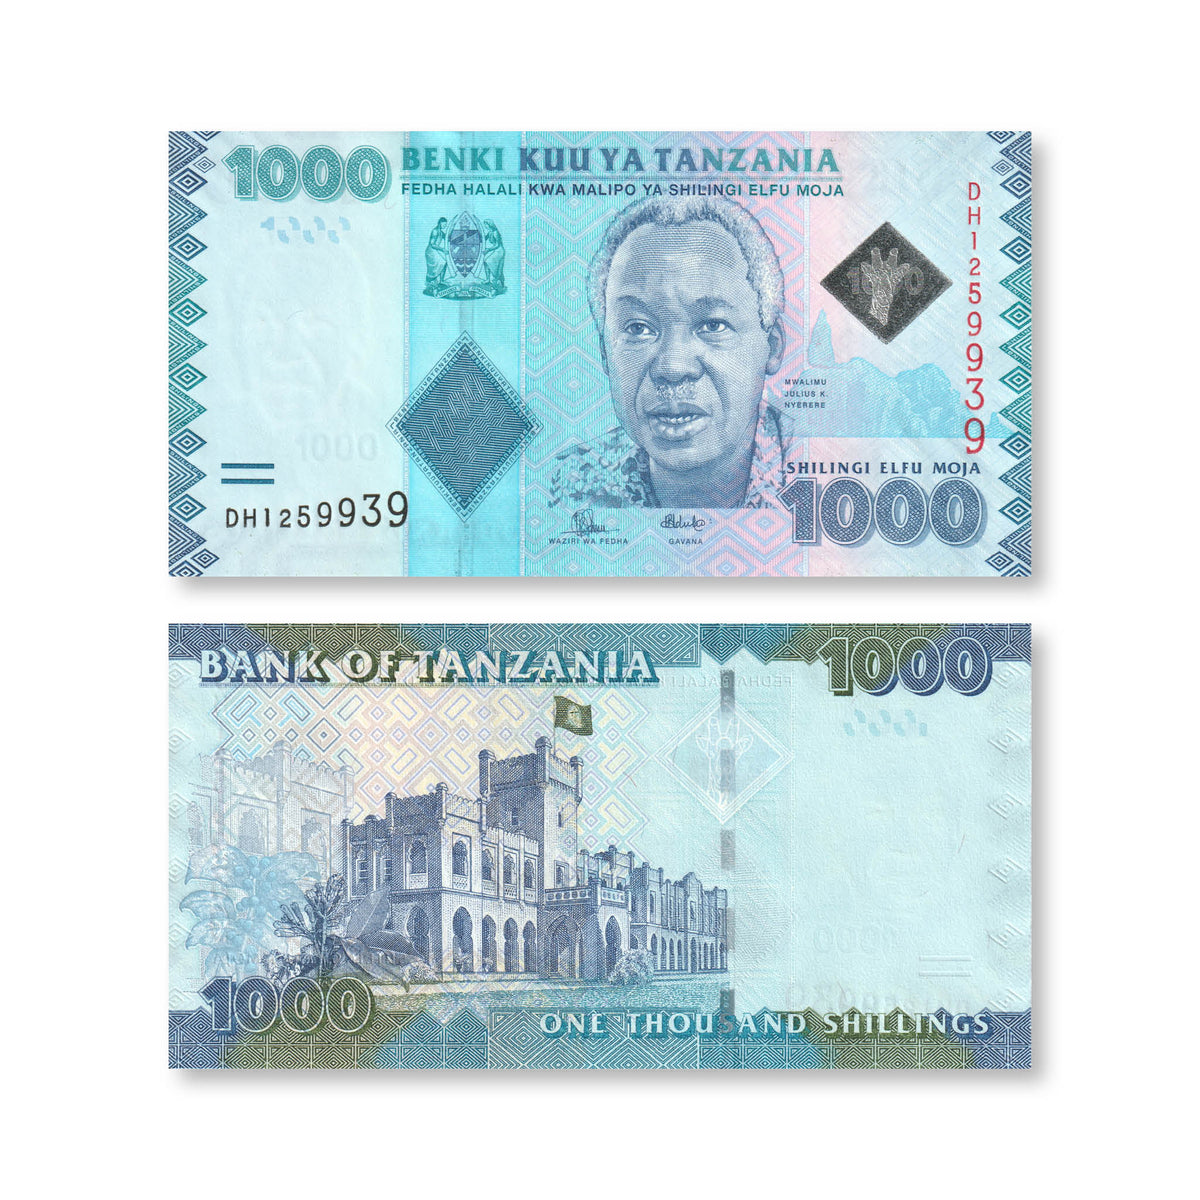 Tanzania 1000 Shilingi, 2015, B140b, P41b, UNC - Robert's World Money - World Banknotes